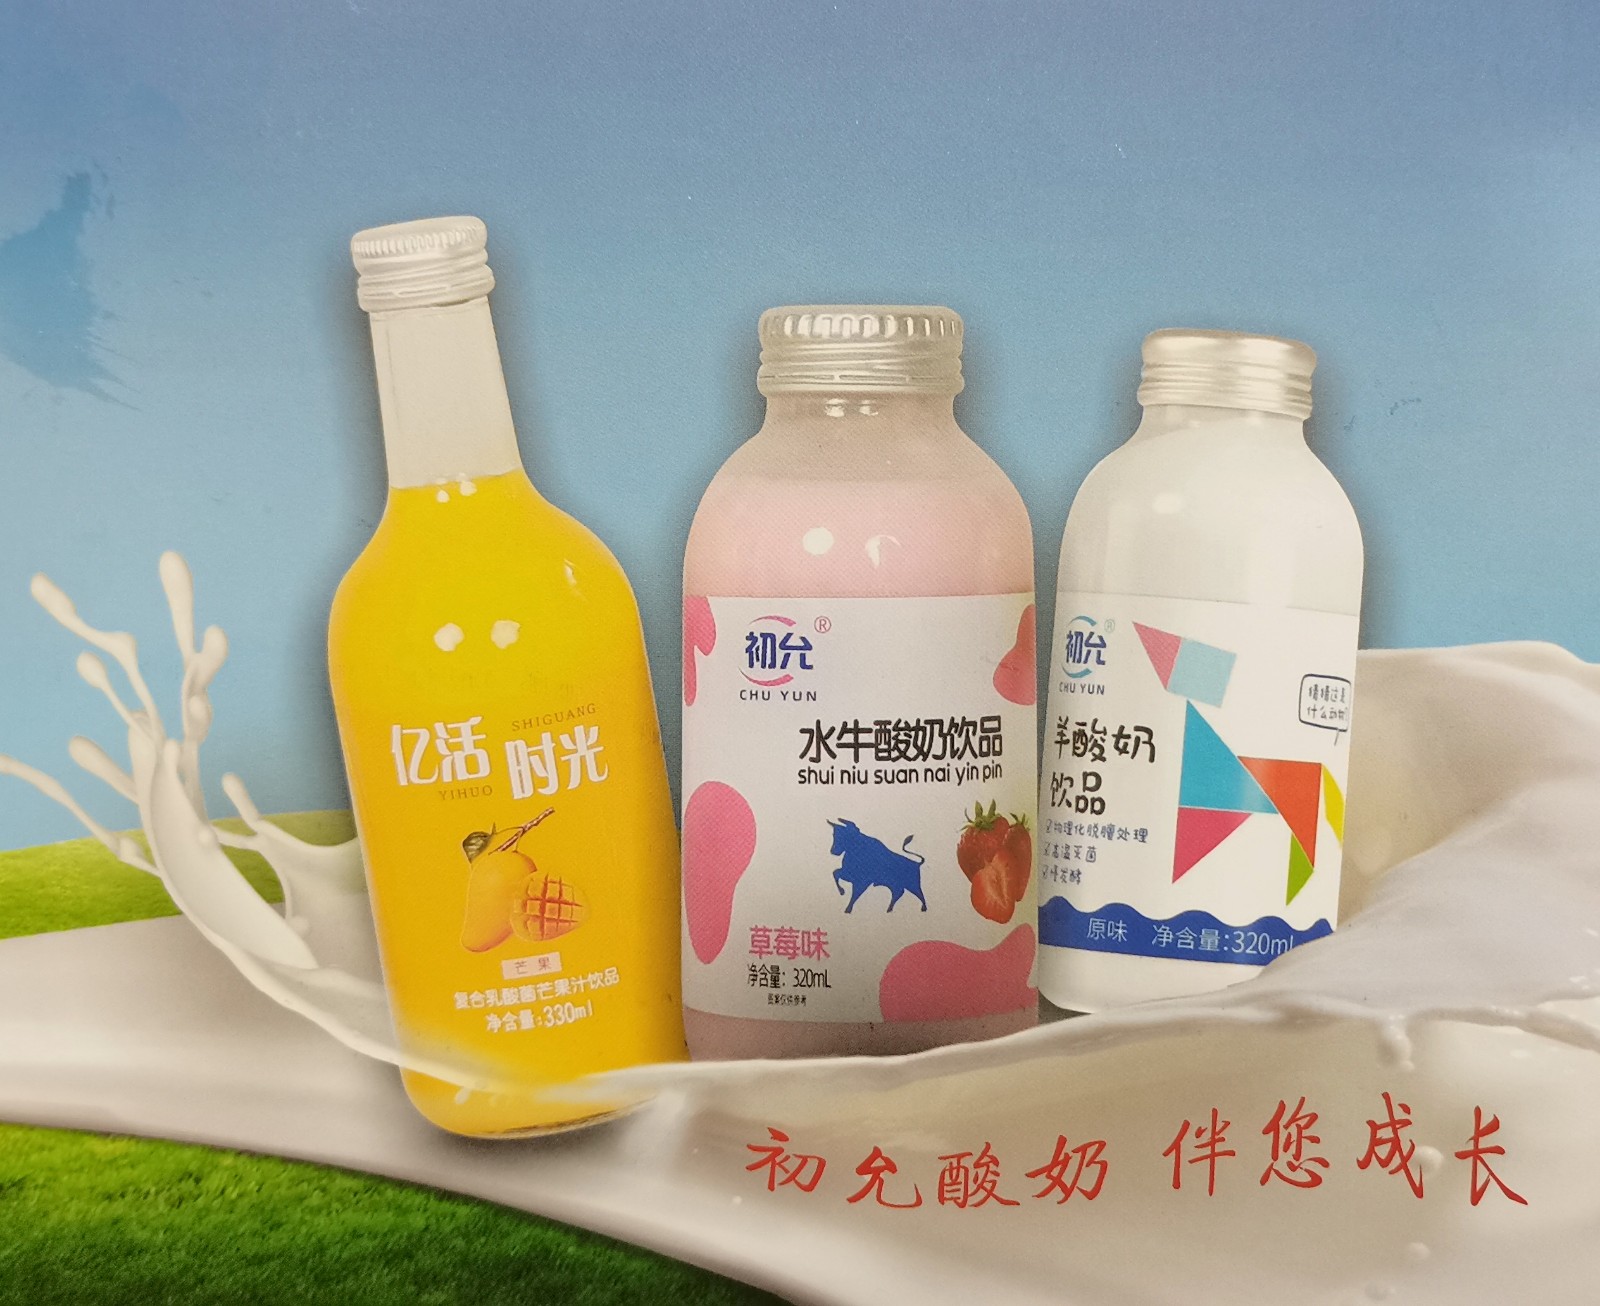 COTV直播-山东初允生物科技有限公司专业生产销售发酵酸奶饮品、益生菌复合果汁饮料等产品，“初允”产品欢迎大家光临！